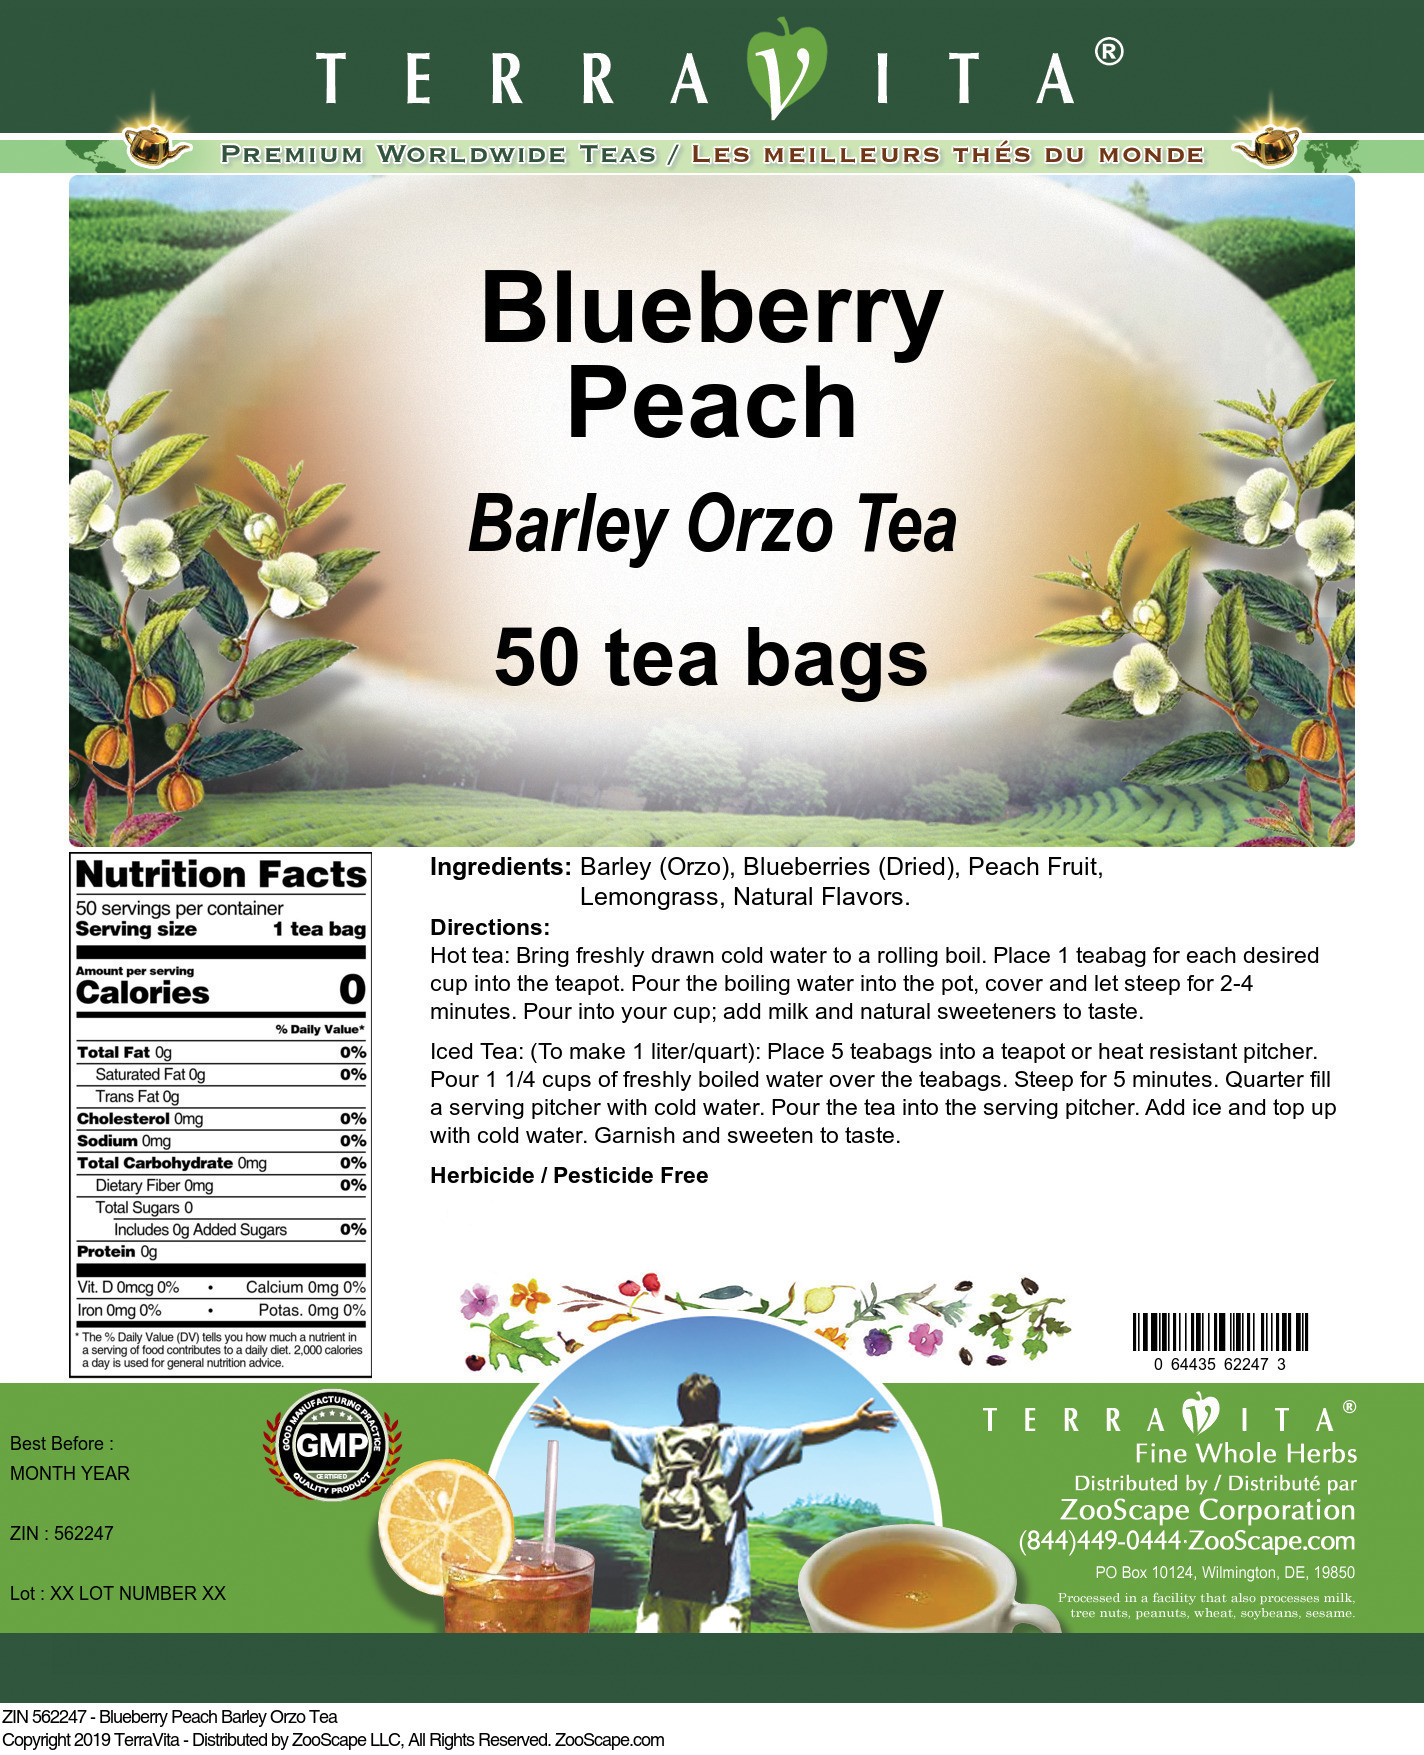 Blueberry Peach Barley Orzo Tea - Label